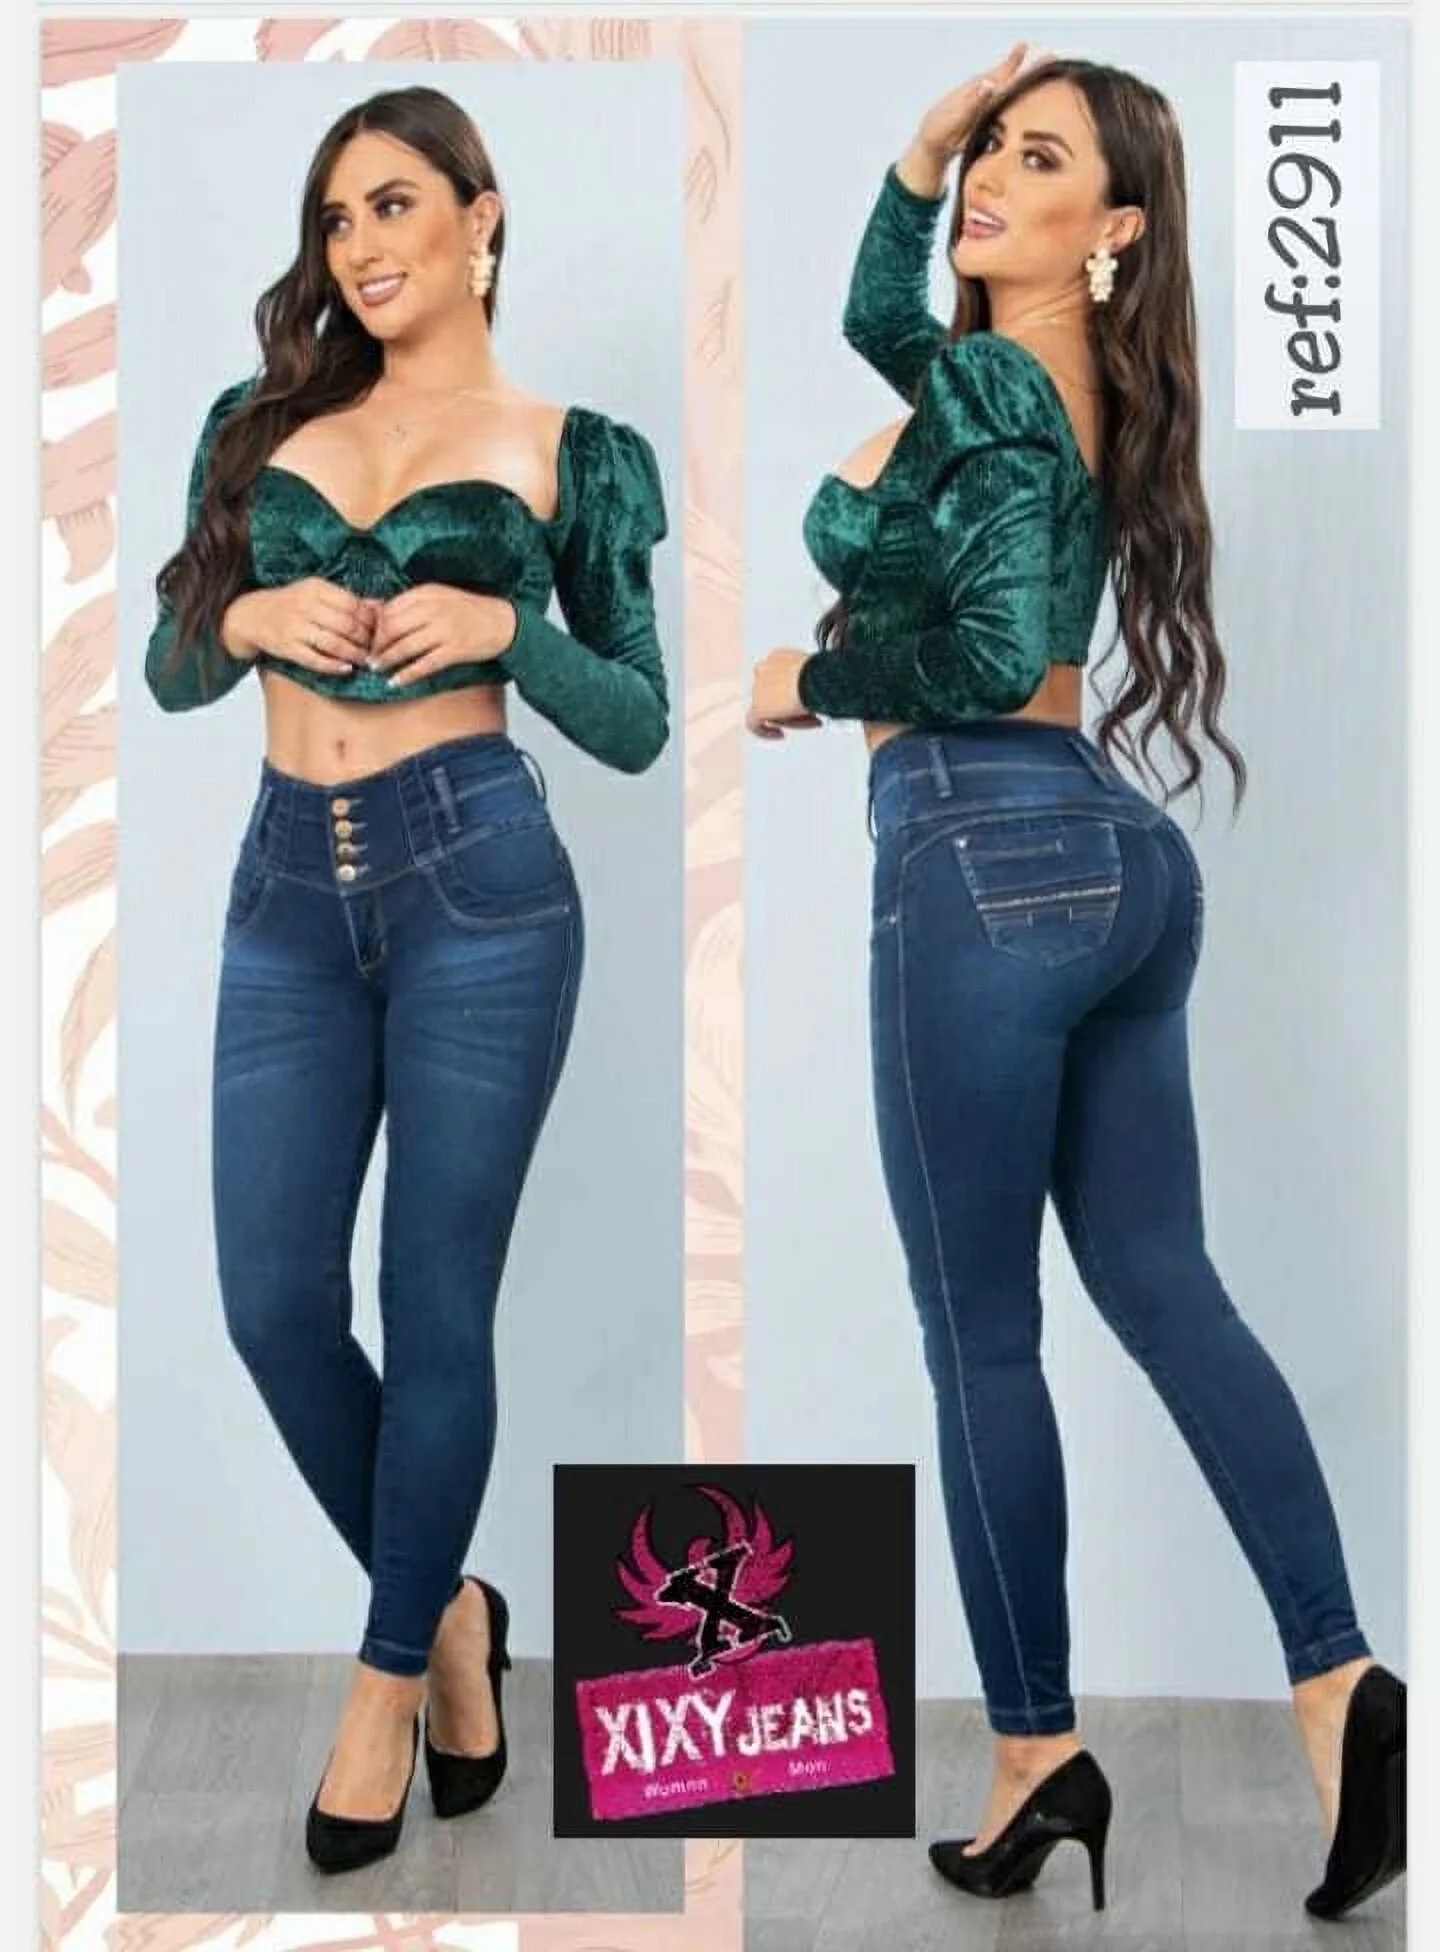 Ropa-xixy-jeans-16160